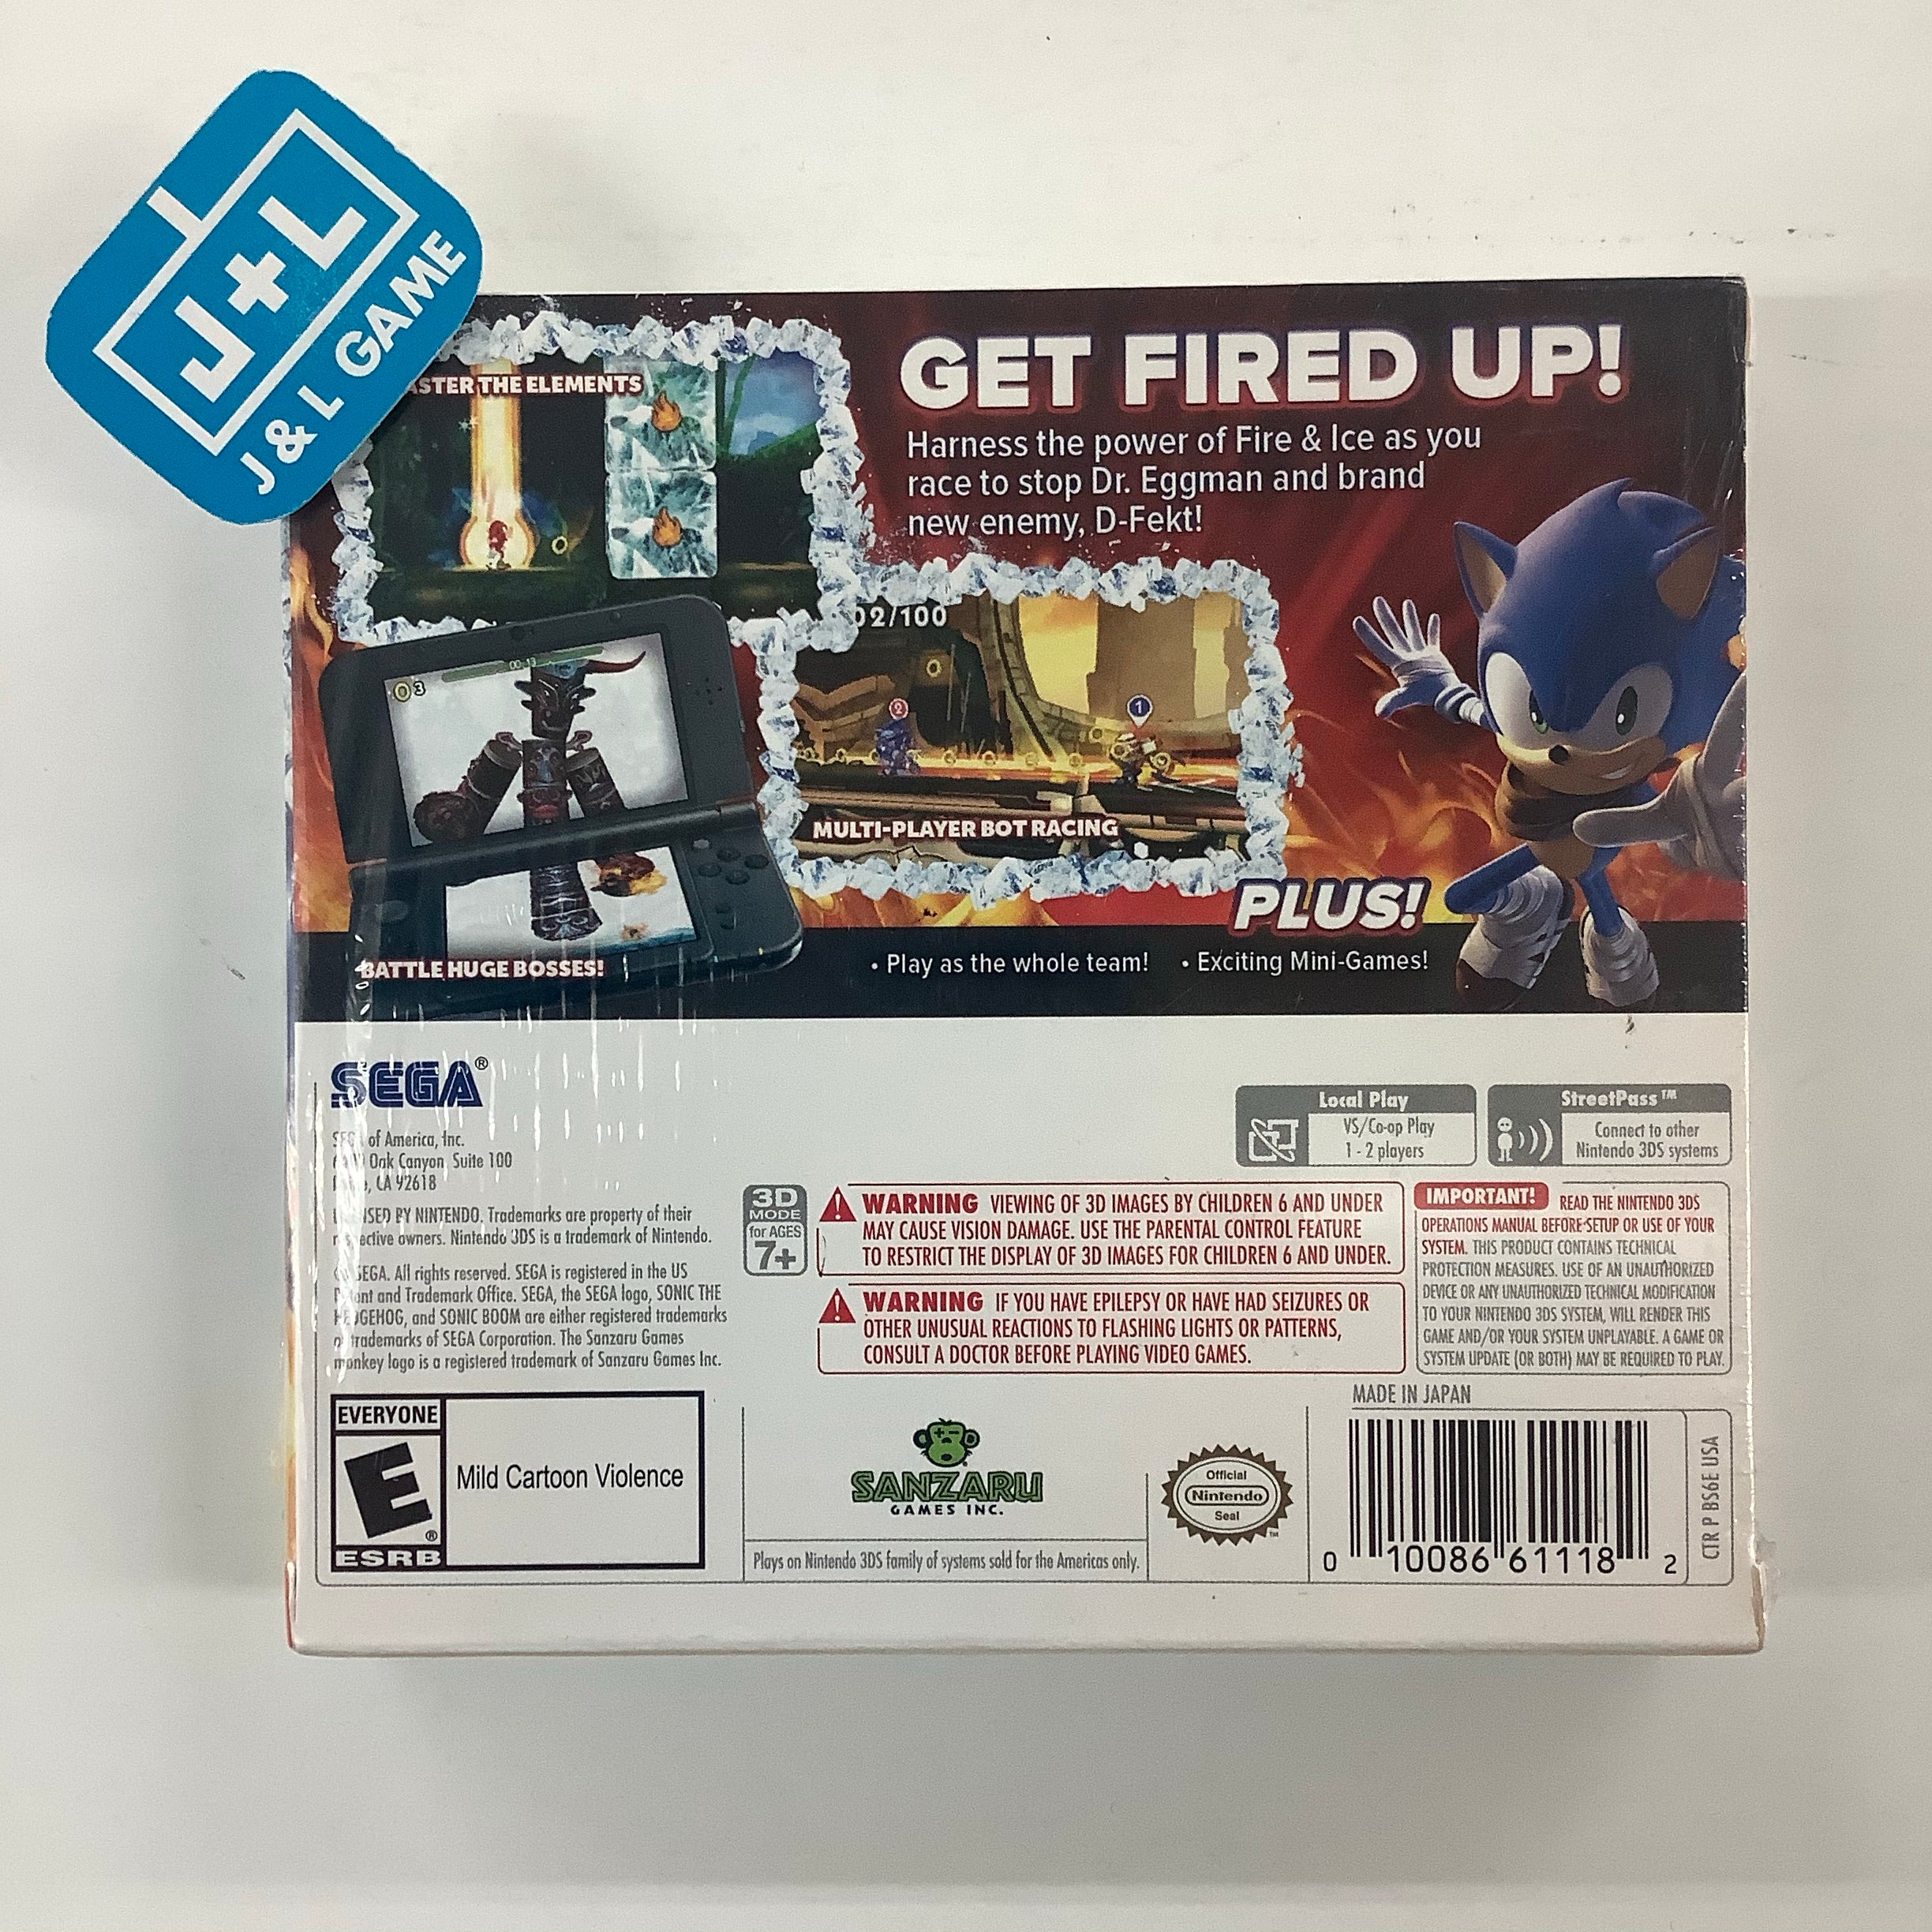 Sonic Boom: Fire & Ice (Launch Edition) - Nintendo 3DS Video Games Sega   